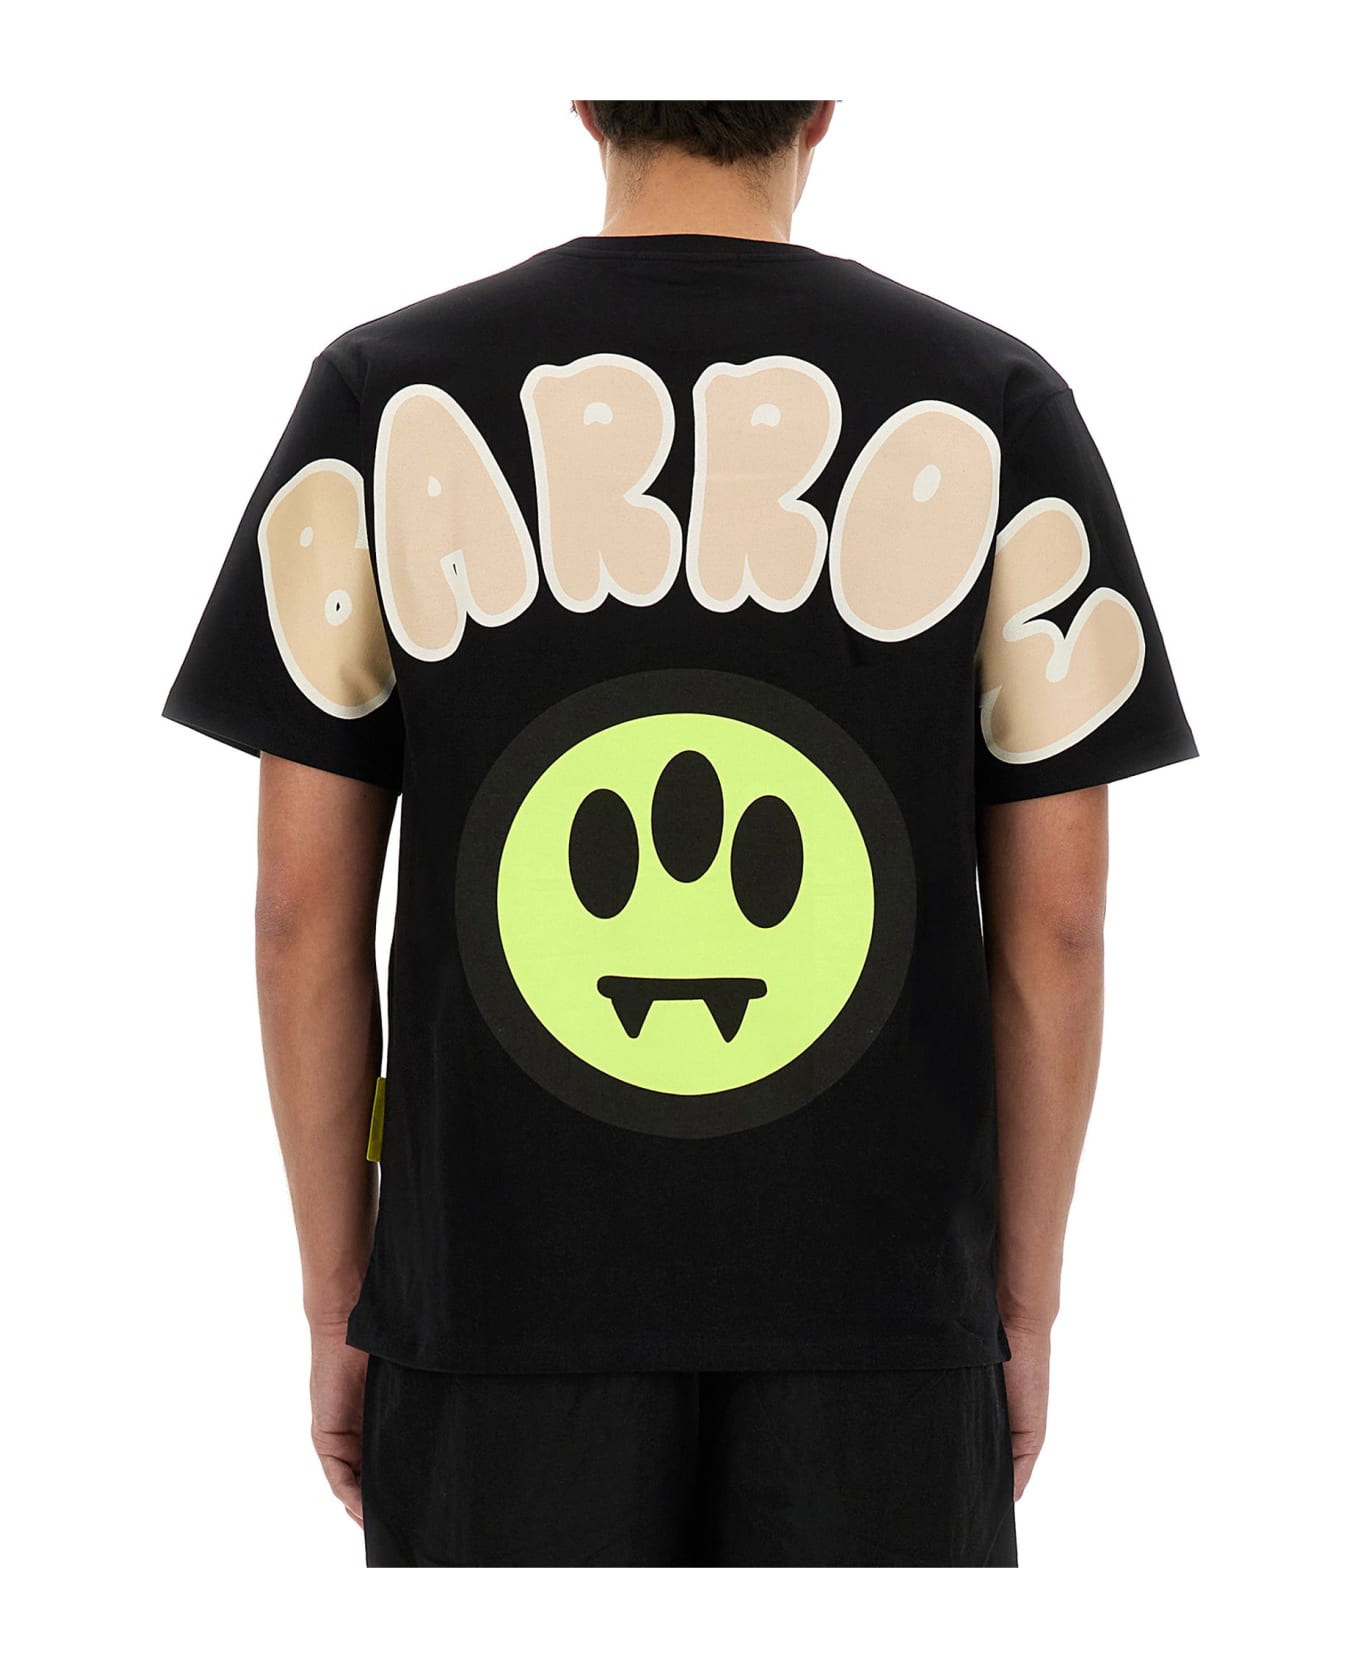 Barrow T-shirt With Logo - Nero